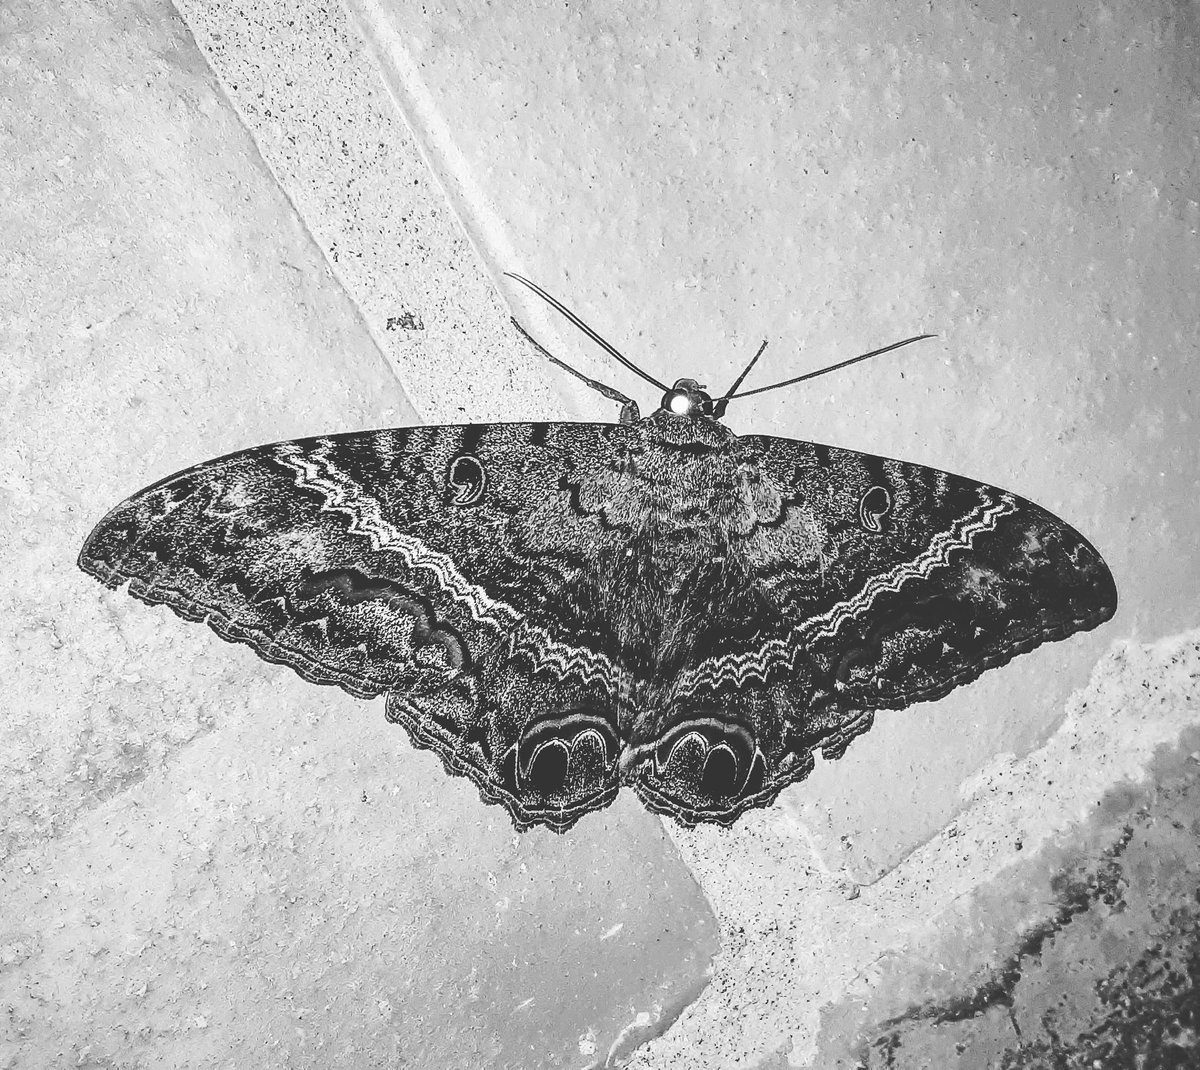 Butterfly
.
.
#blackandwhite #monochromaticphotography #monochrome #bnw  #blackandwhitephotography #bnw_photography #bnw_planet #monoart  #bw_captures #blancoynegro  #blancoynegrofotografia #artvisual  #samsungphotos
#Butterfly
.